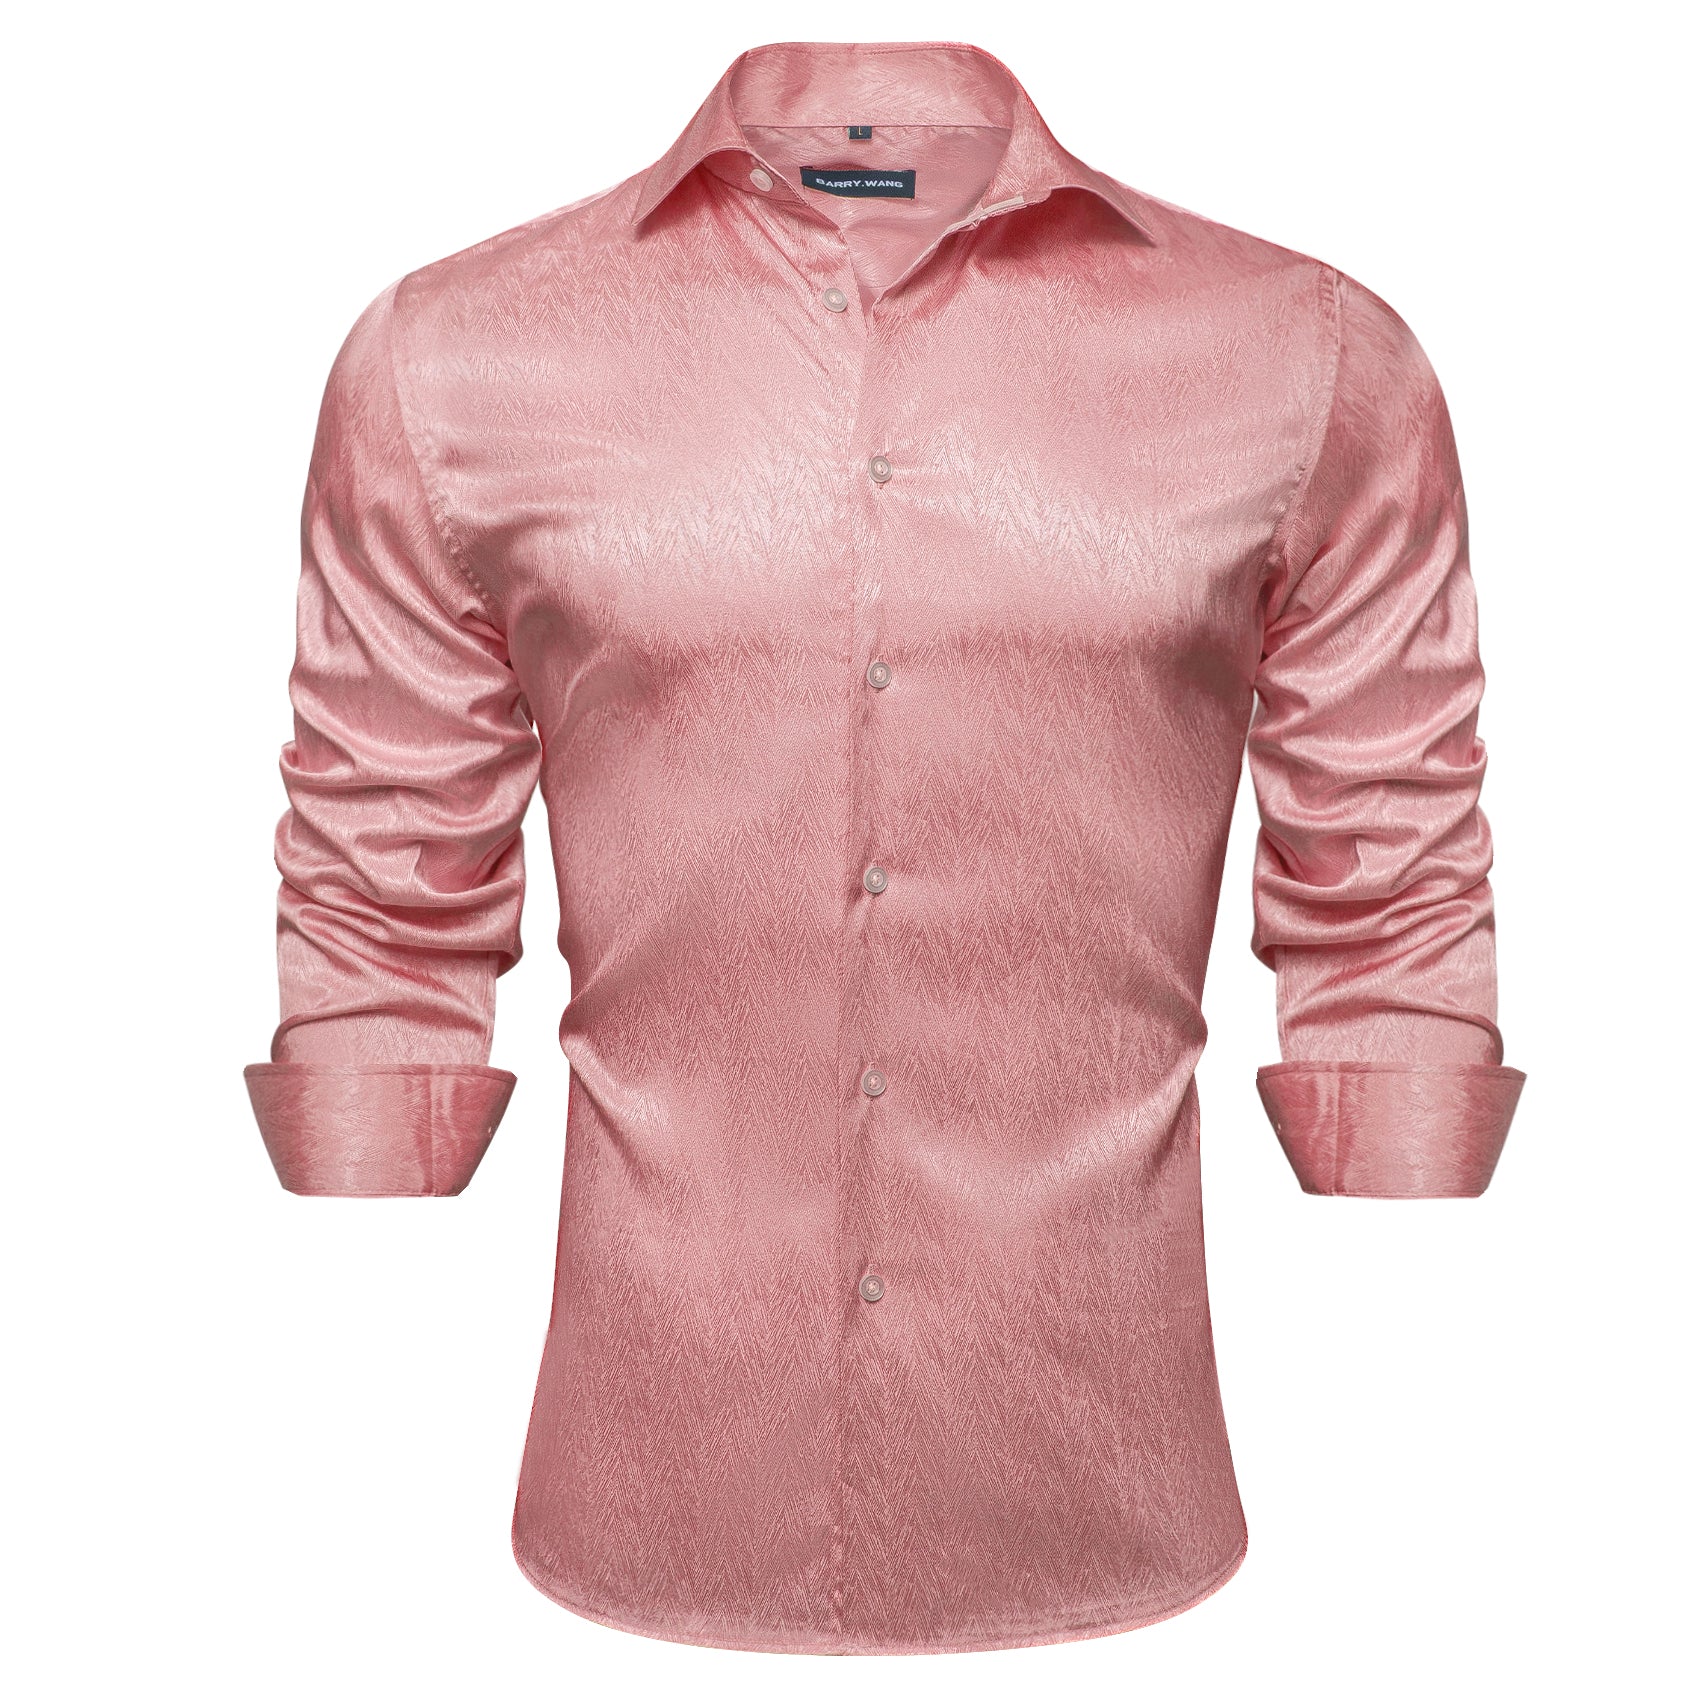 Barry.wang Fashion Rose Pink Solid Silk Shirt